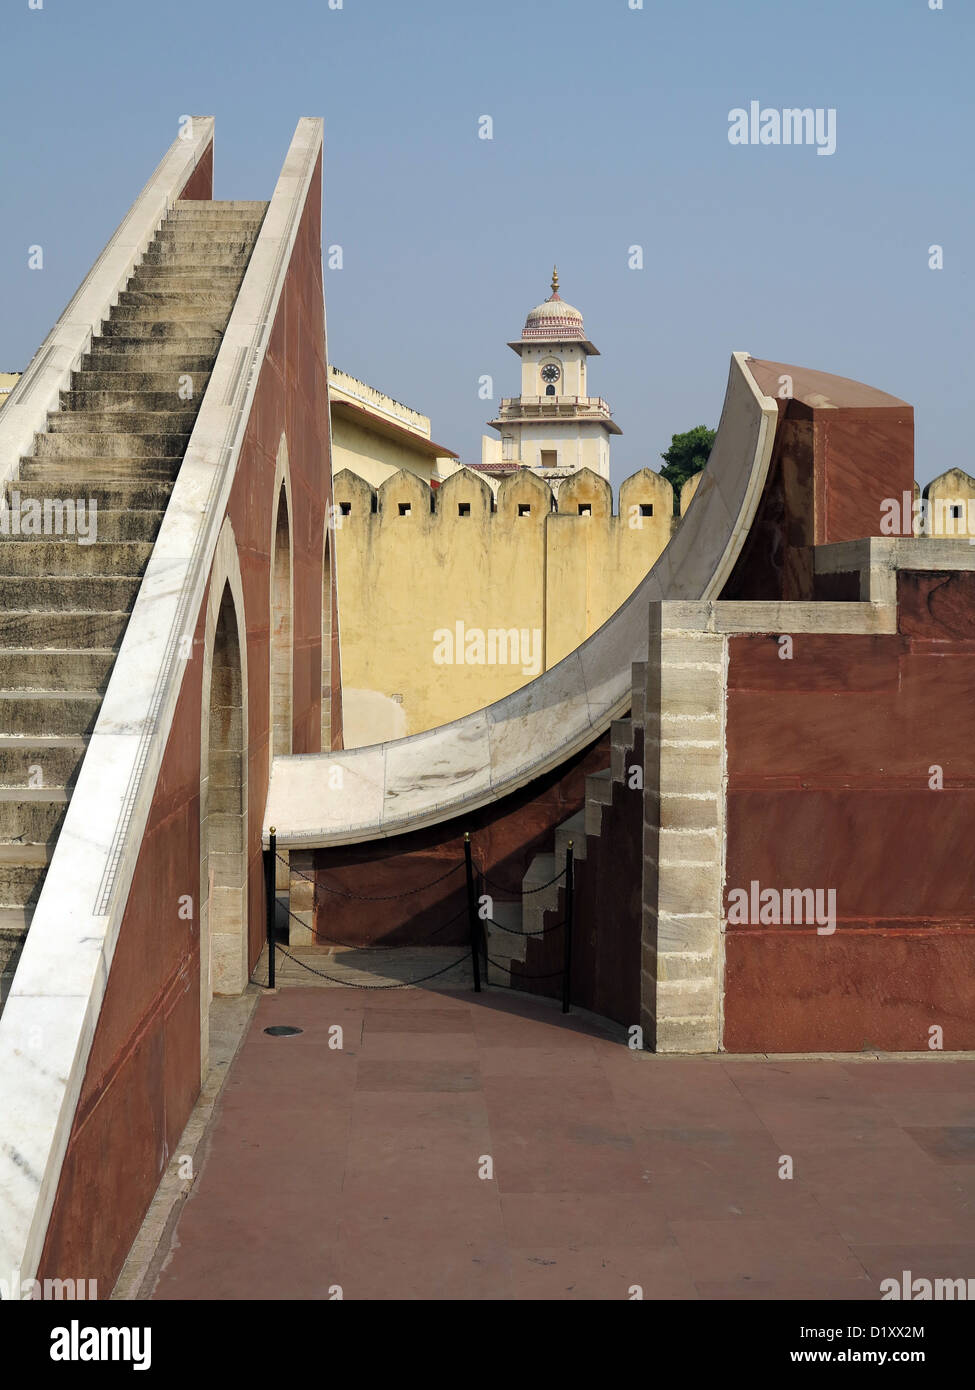 Strumenti astronomici a Jantar Mantar observatory - Jaipur, Rajasthan, India Foto Stock